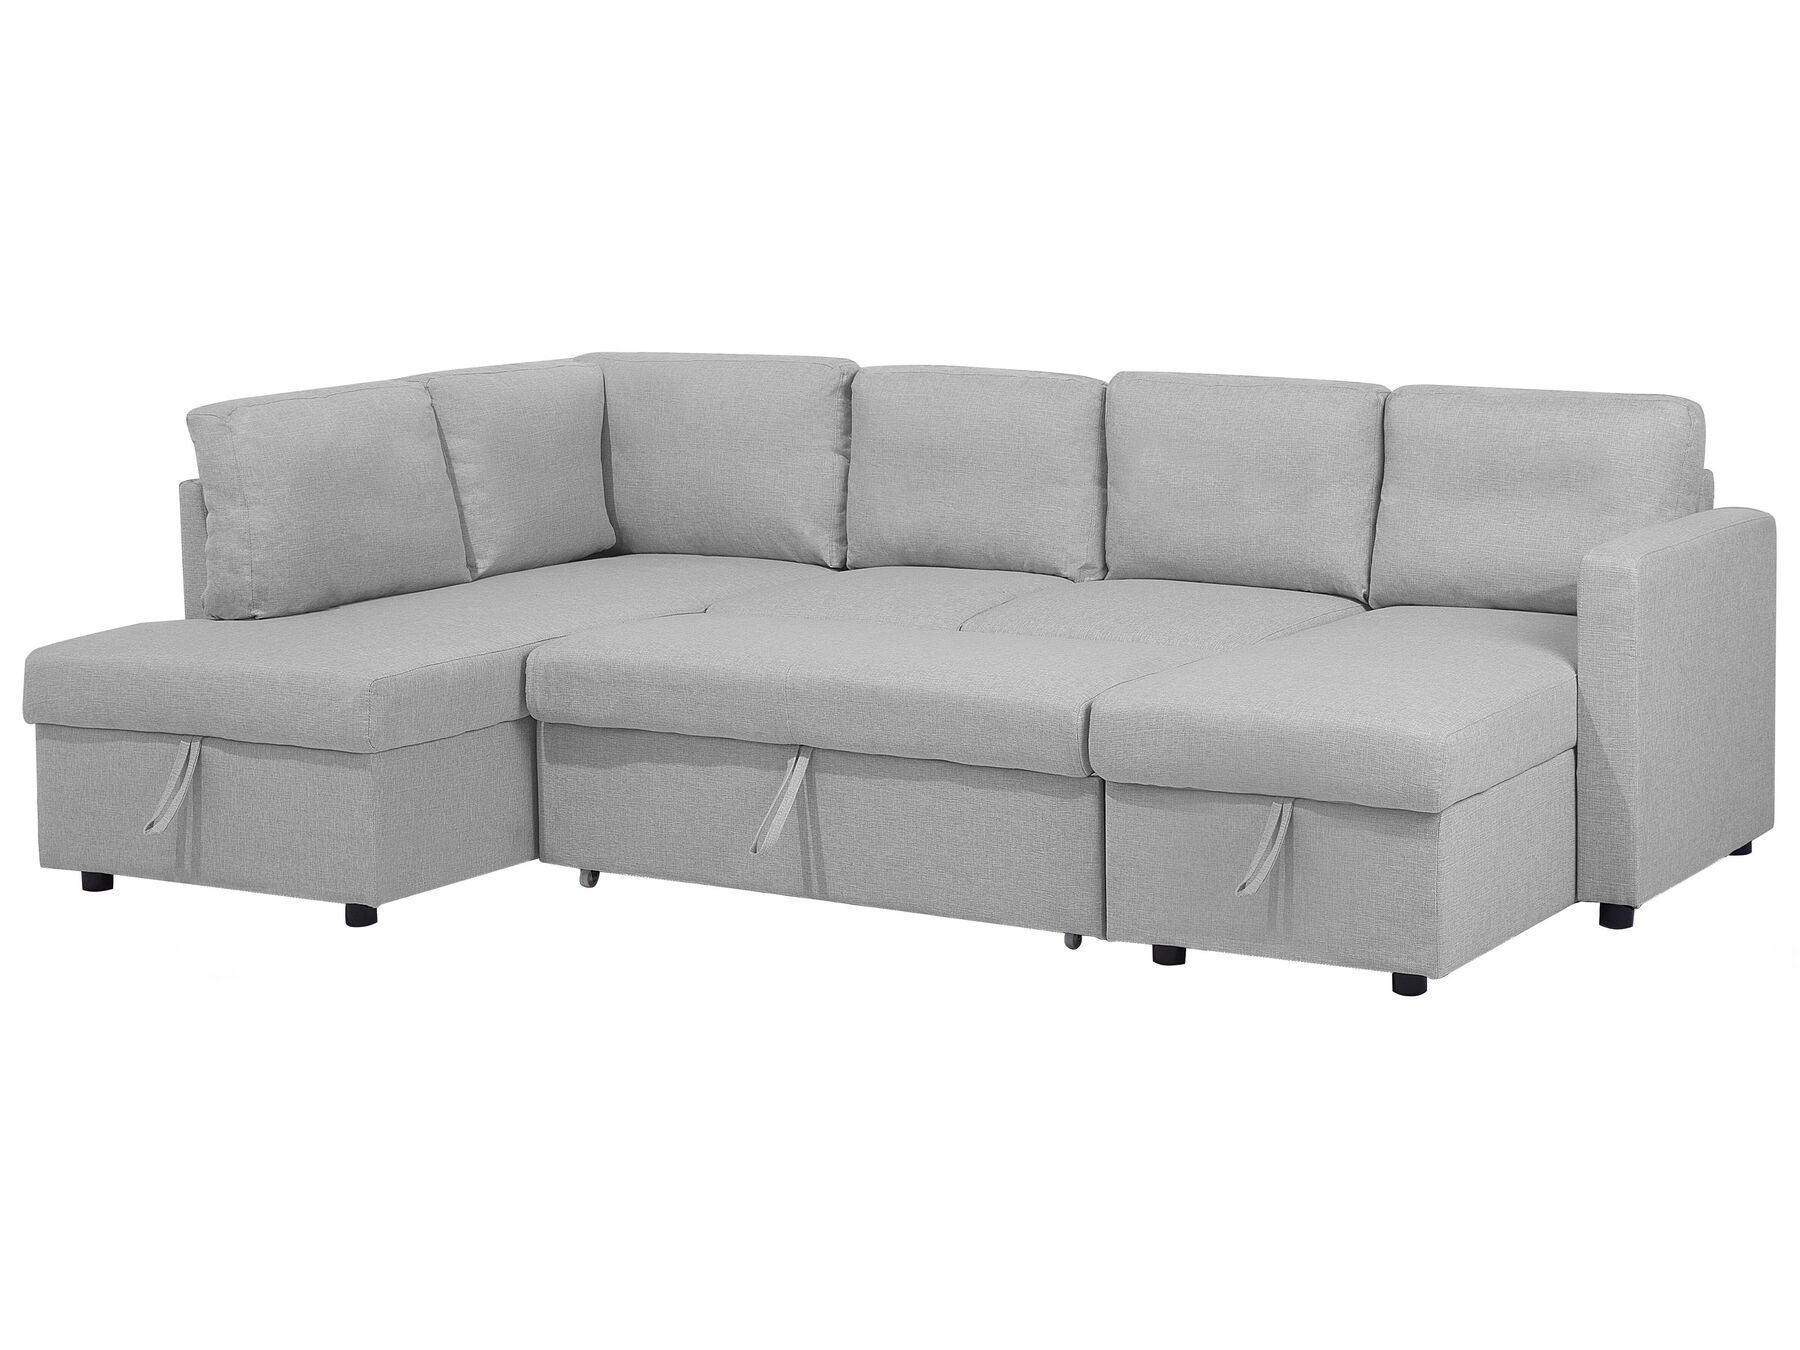 U-Shaped Sofa Bed Light Grey Modern 5 Seater Storage Fabric Upholstered Karrabo